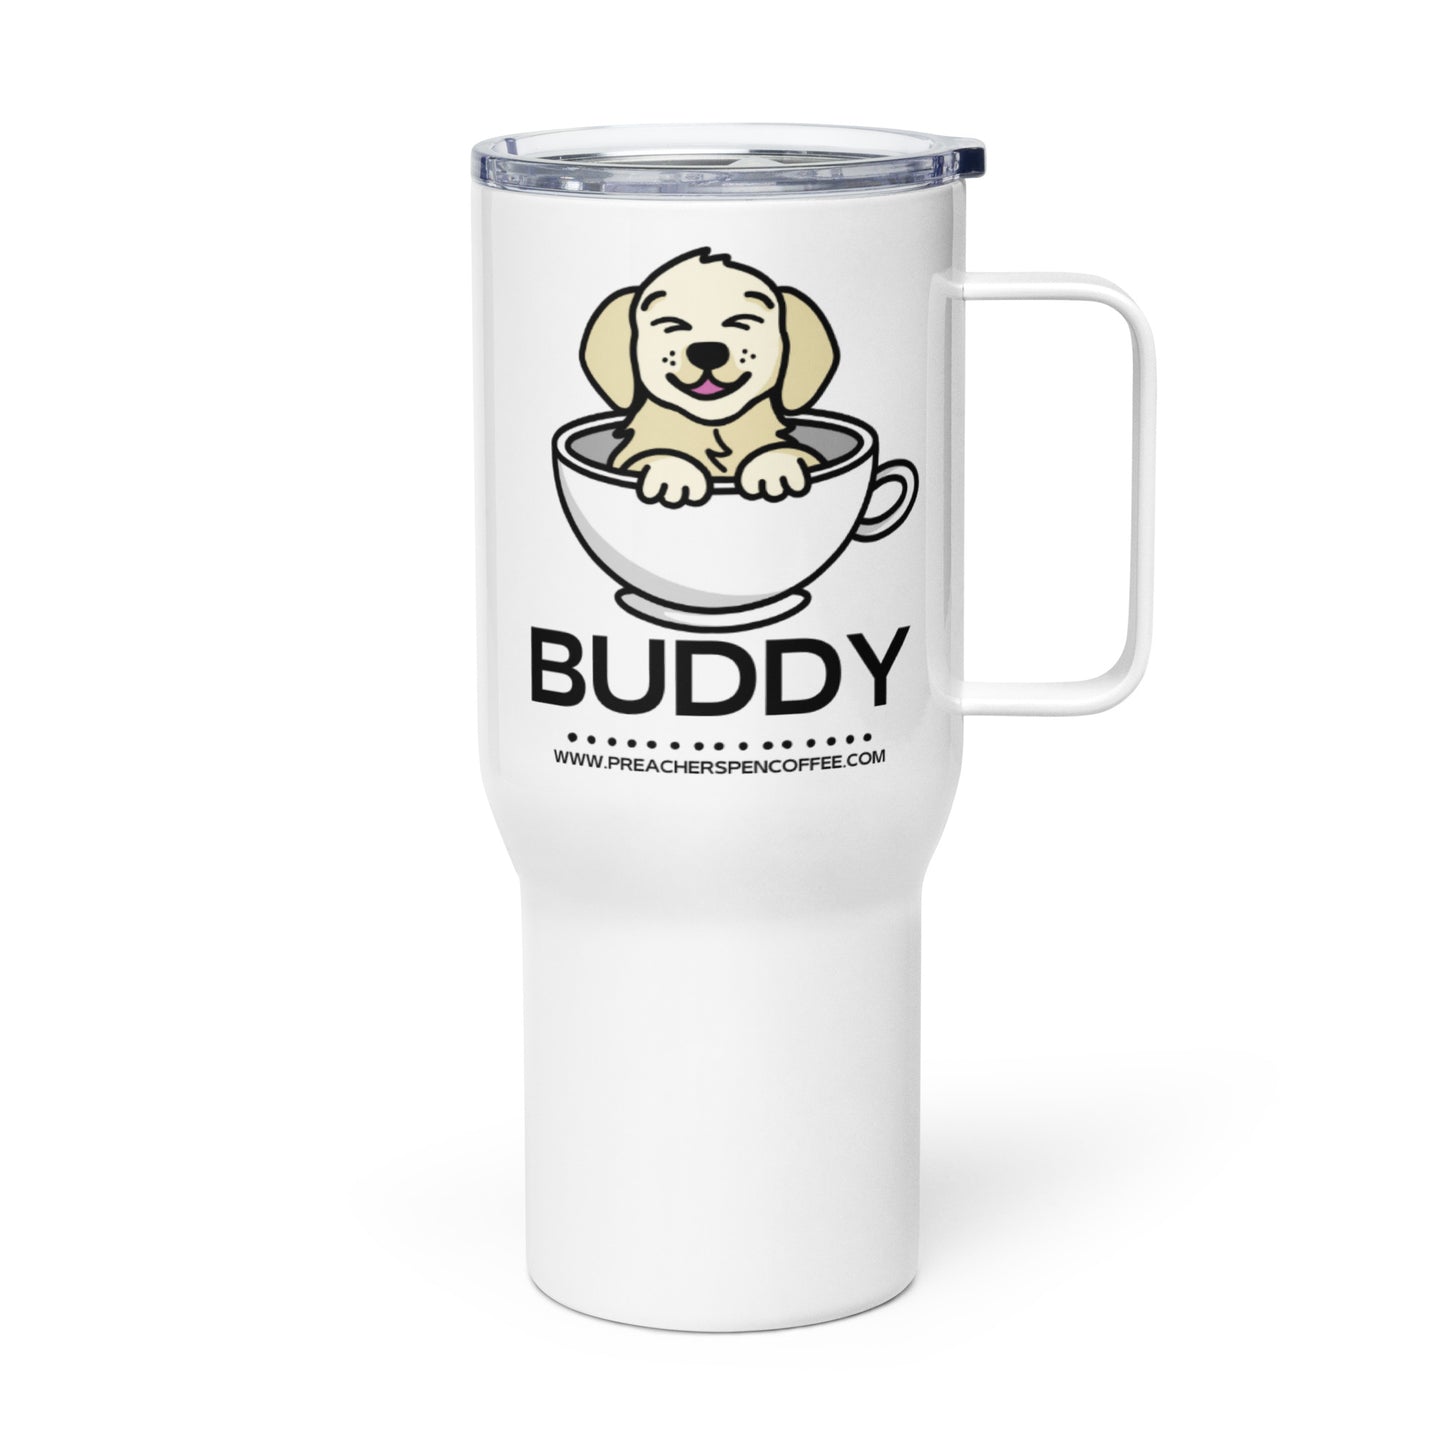 Buddy Travel Mug